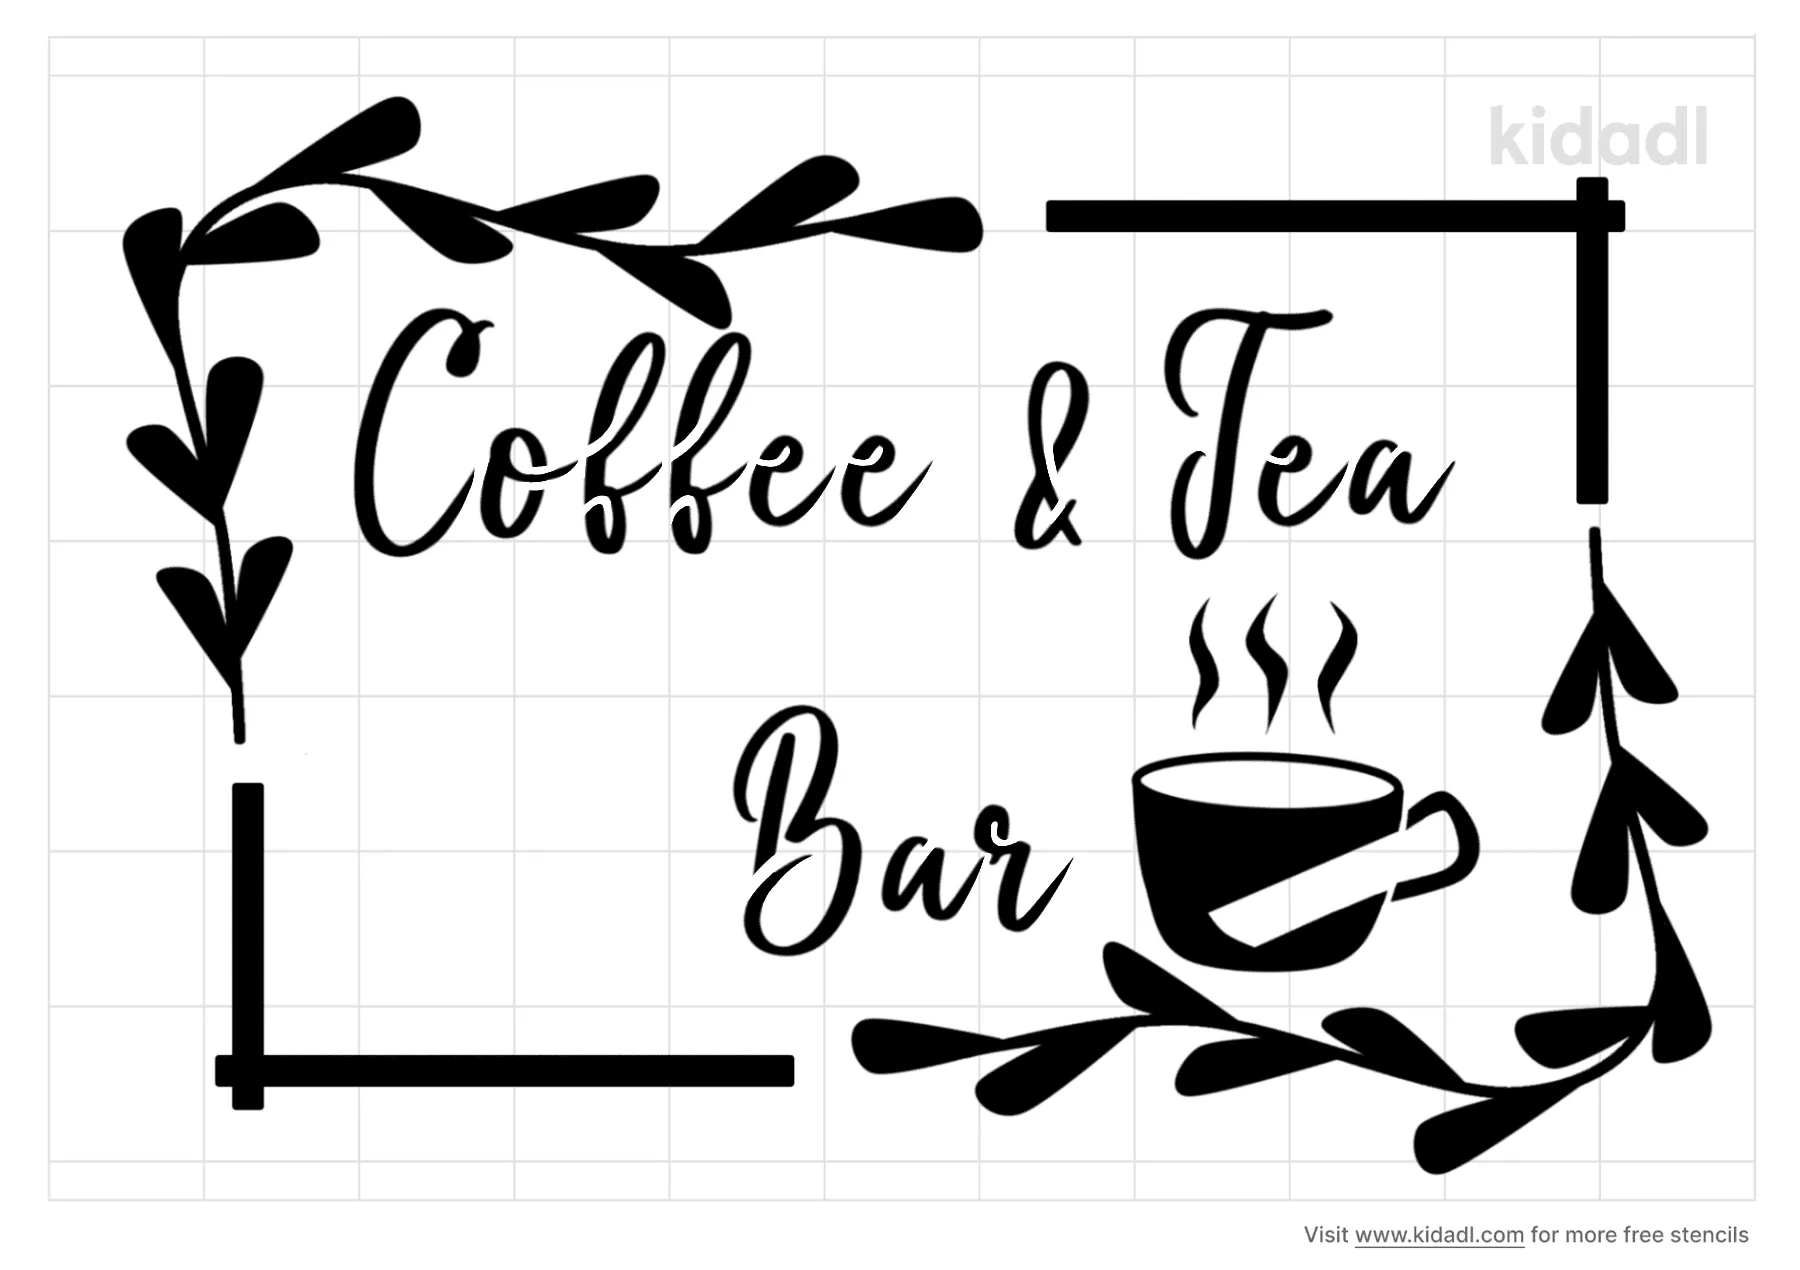 Coffee And Tea Bar Stencils Free Printable Words Quotes Stencils Kidadl And Words Quotes Stencils Free Printable Stencils Kidadl